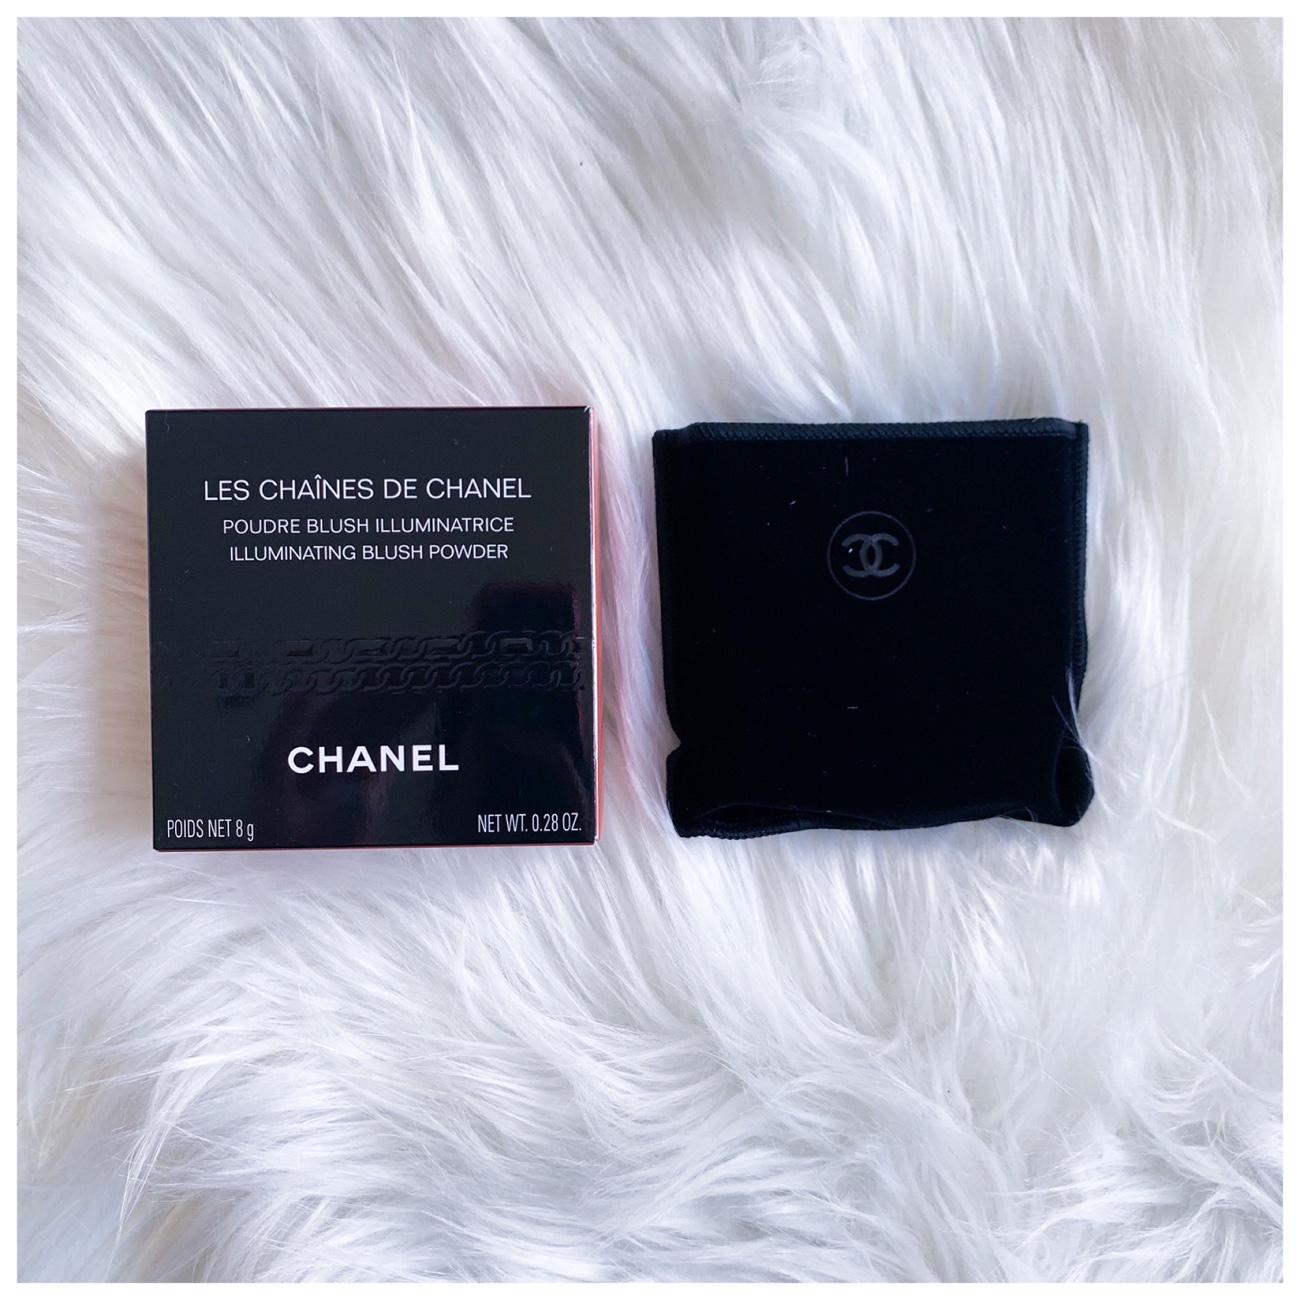 Les Chaînes De Chanel Illuminating Blush Powder